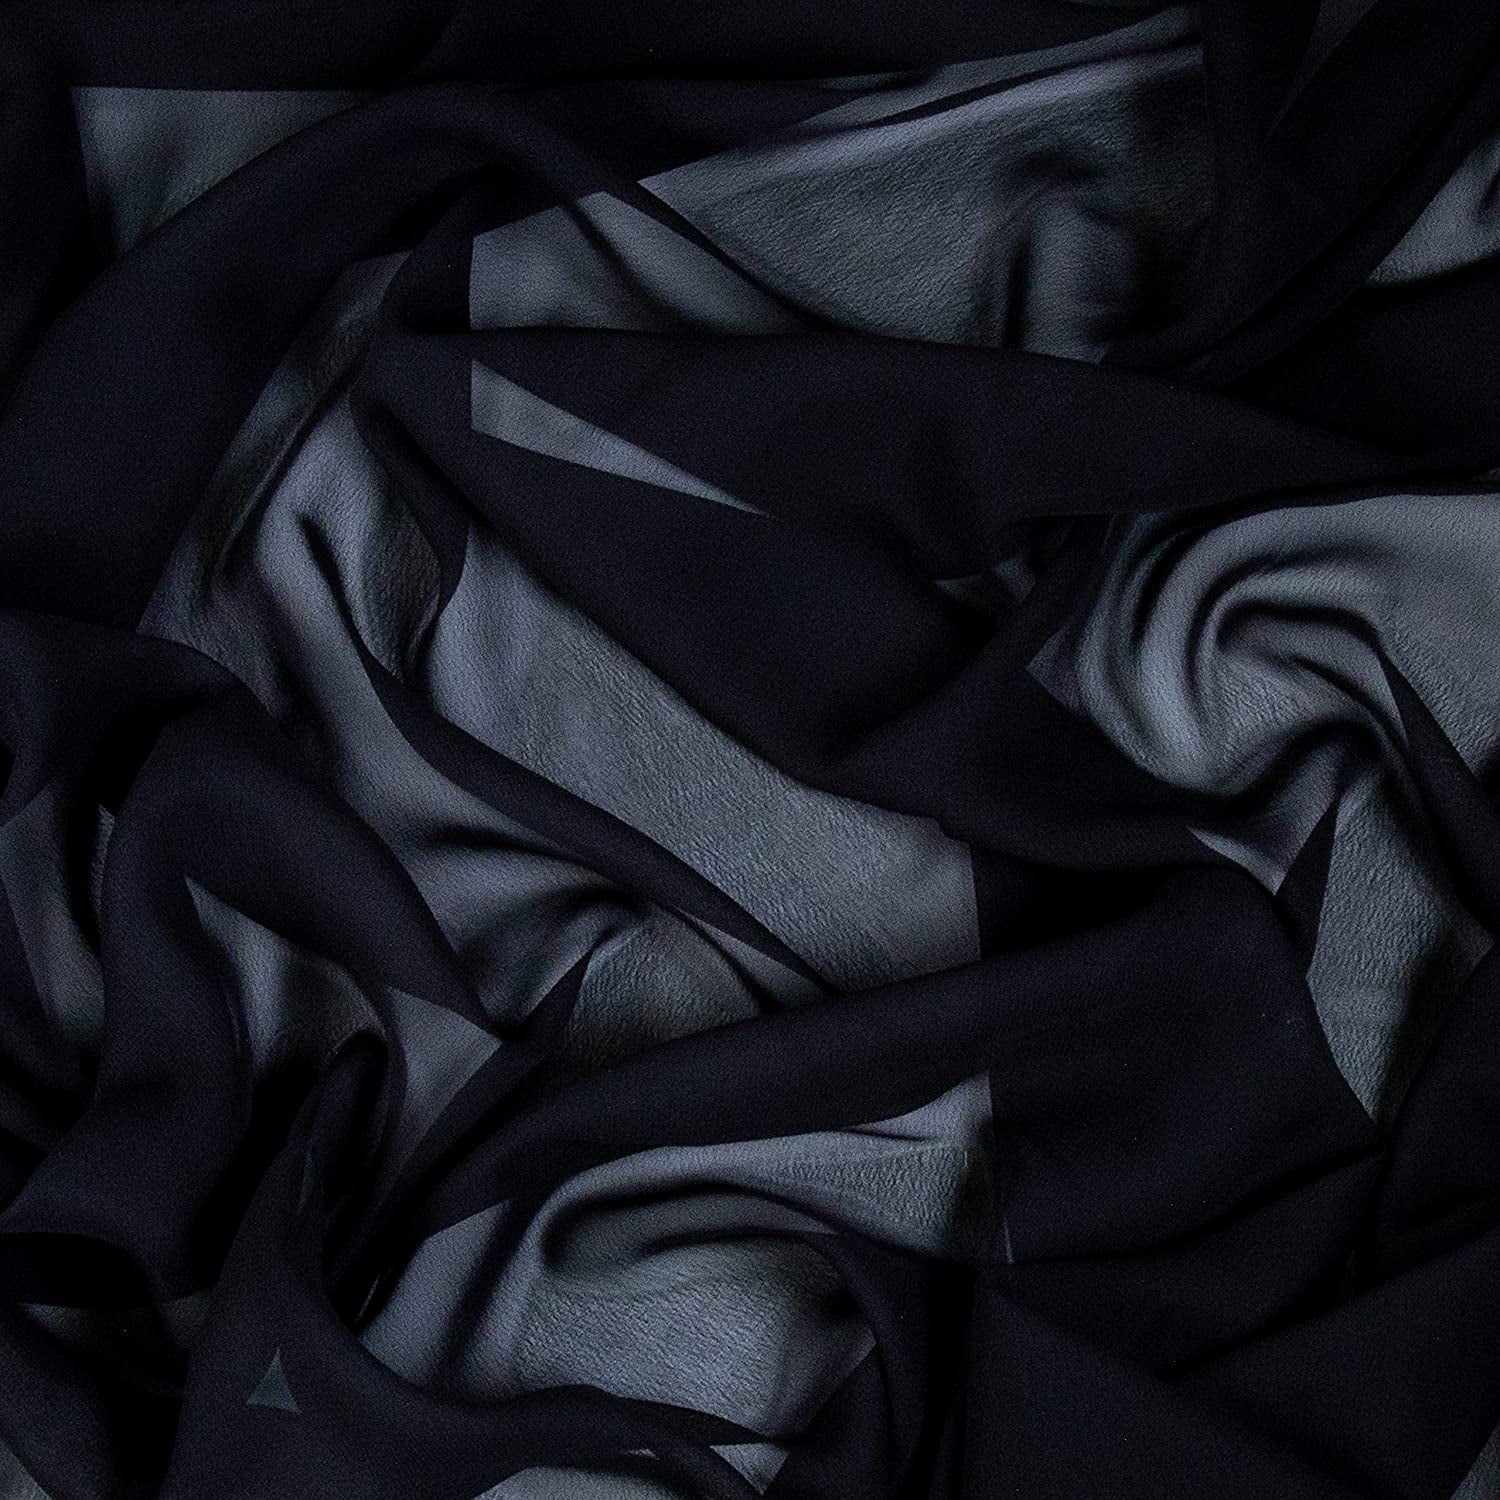 Chiffon Spandex - Black - 2 Way Slight Stretch Chiffon Fabric Imitation  Silk 58/60 By The Yard